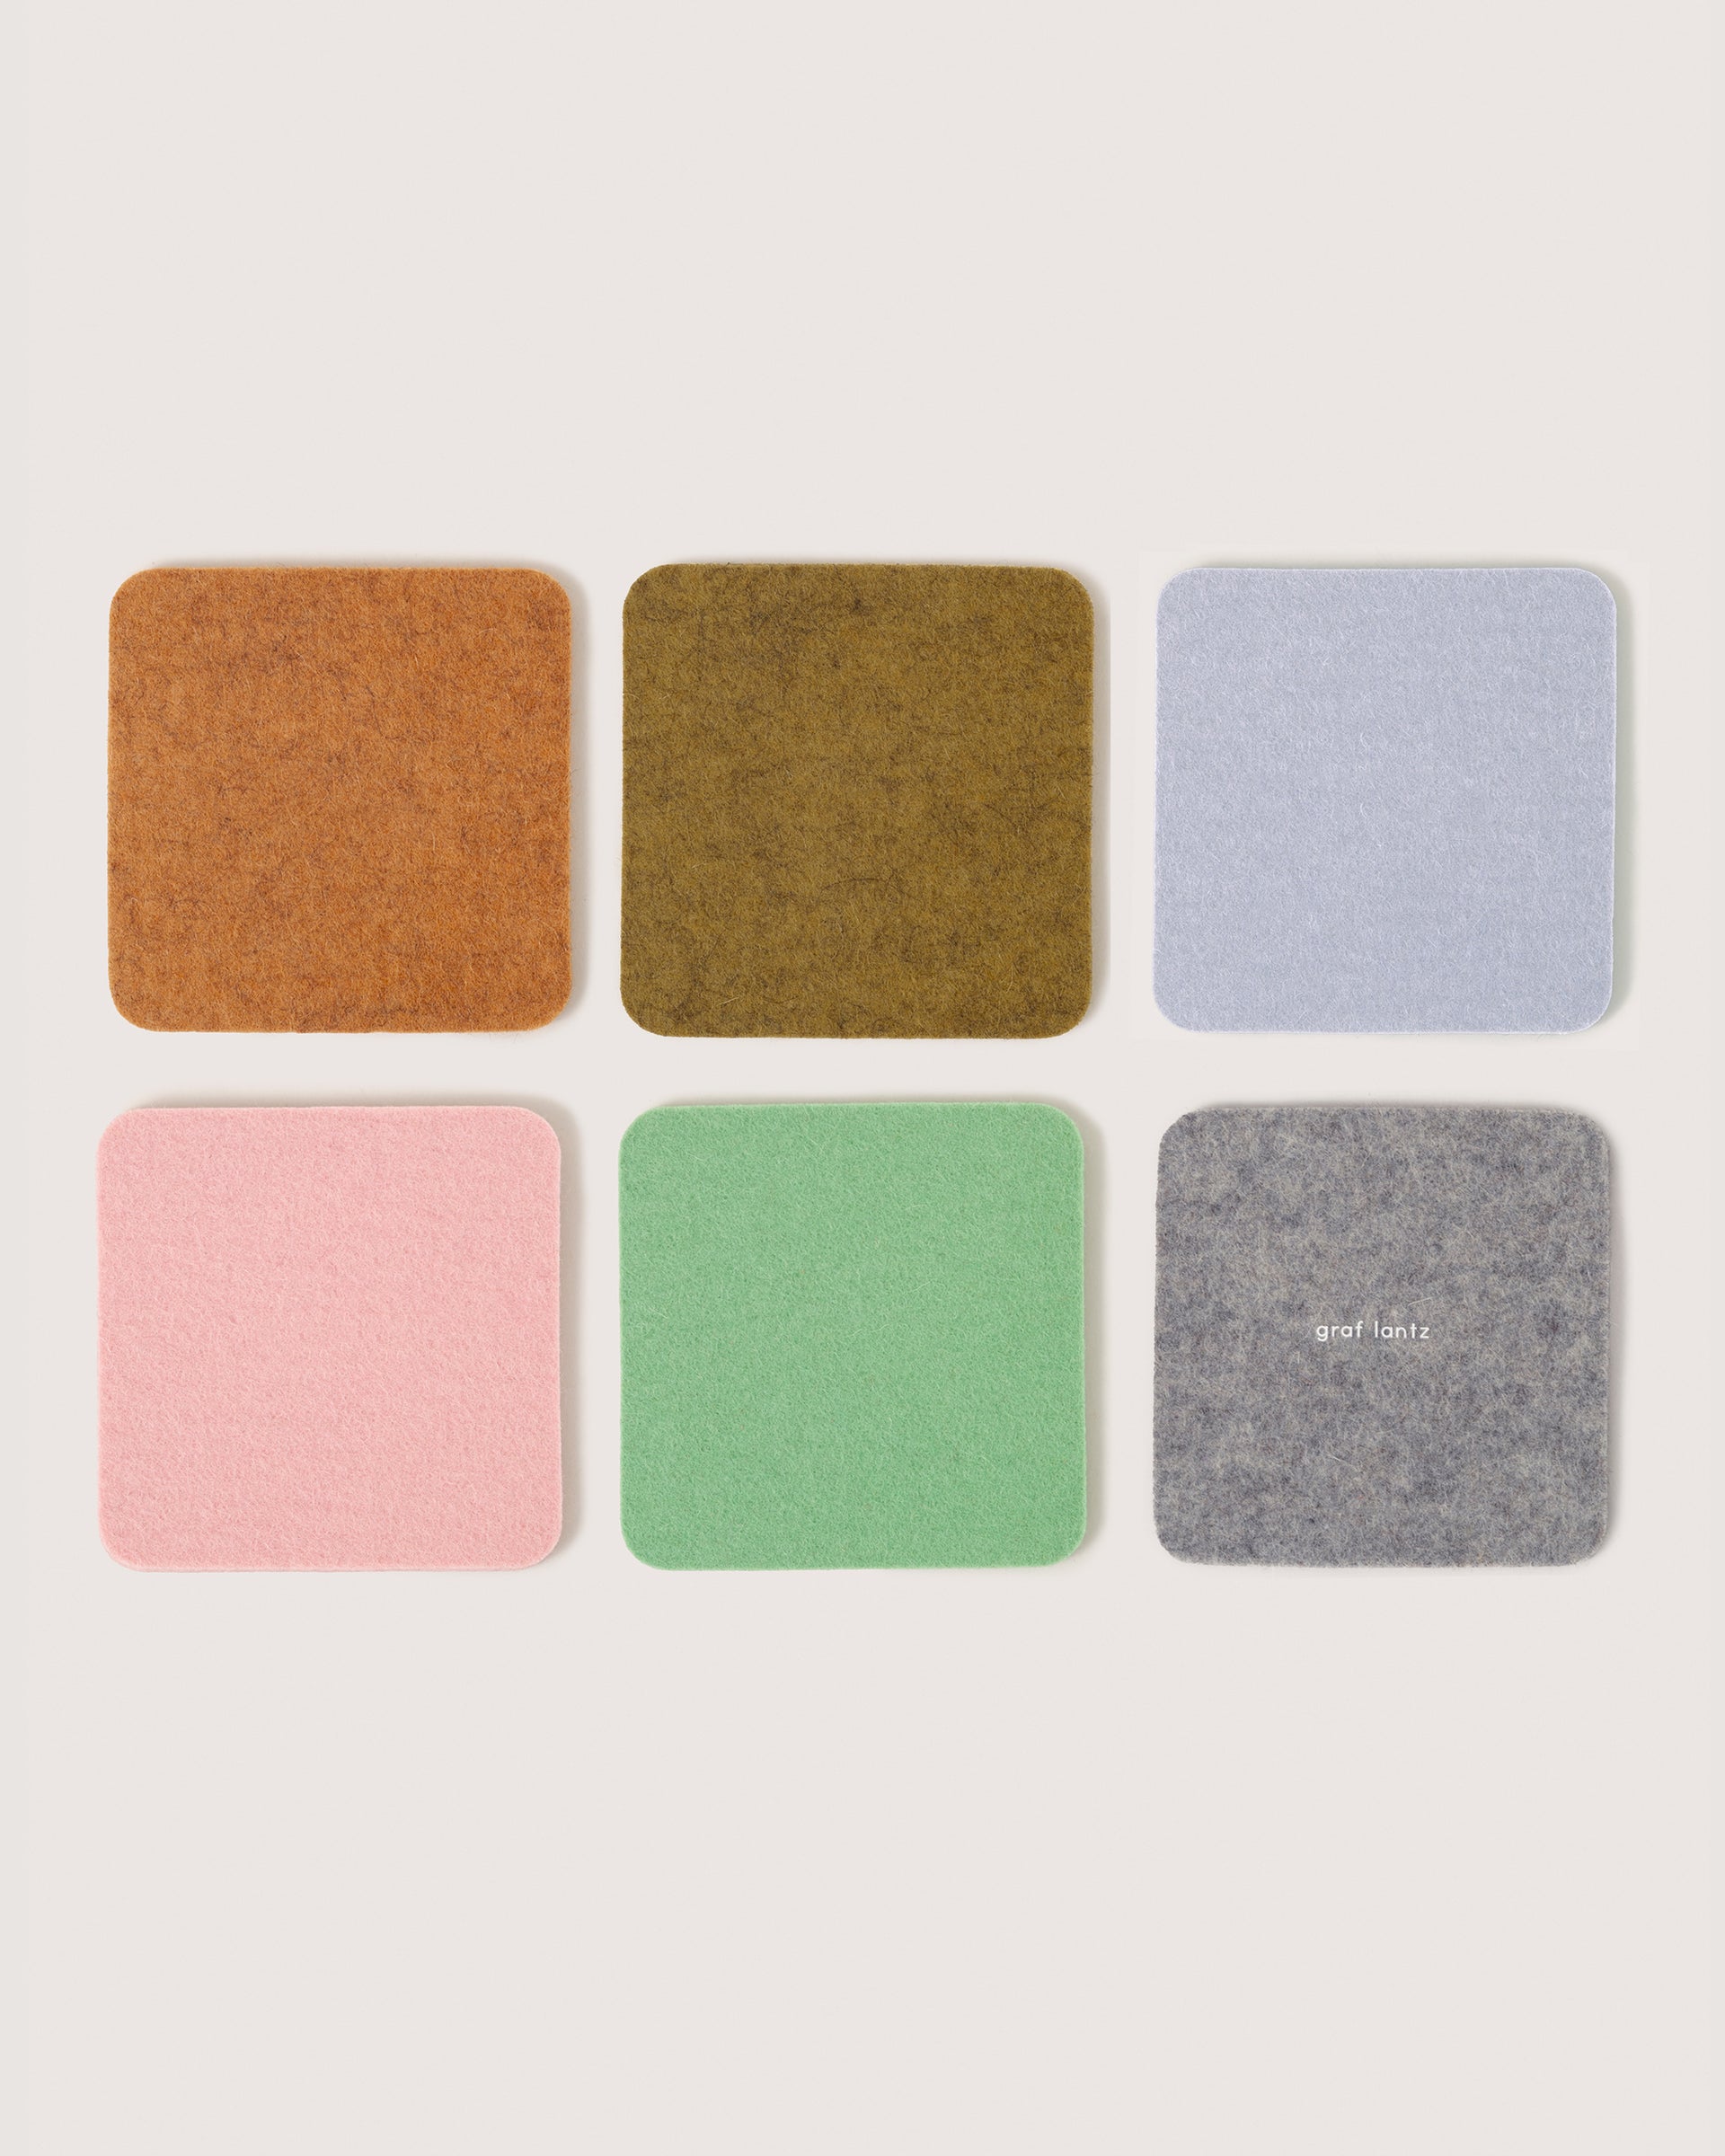 Six square felt coasters in Miso, Matcha, Fog, Ochre, Rock Salt, and Granite colors by Graf Lantz, white background